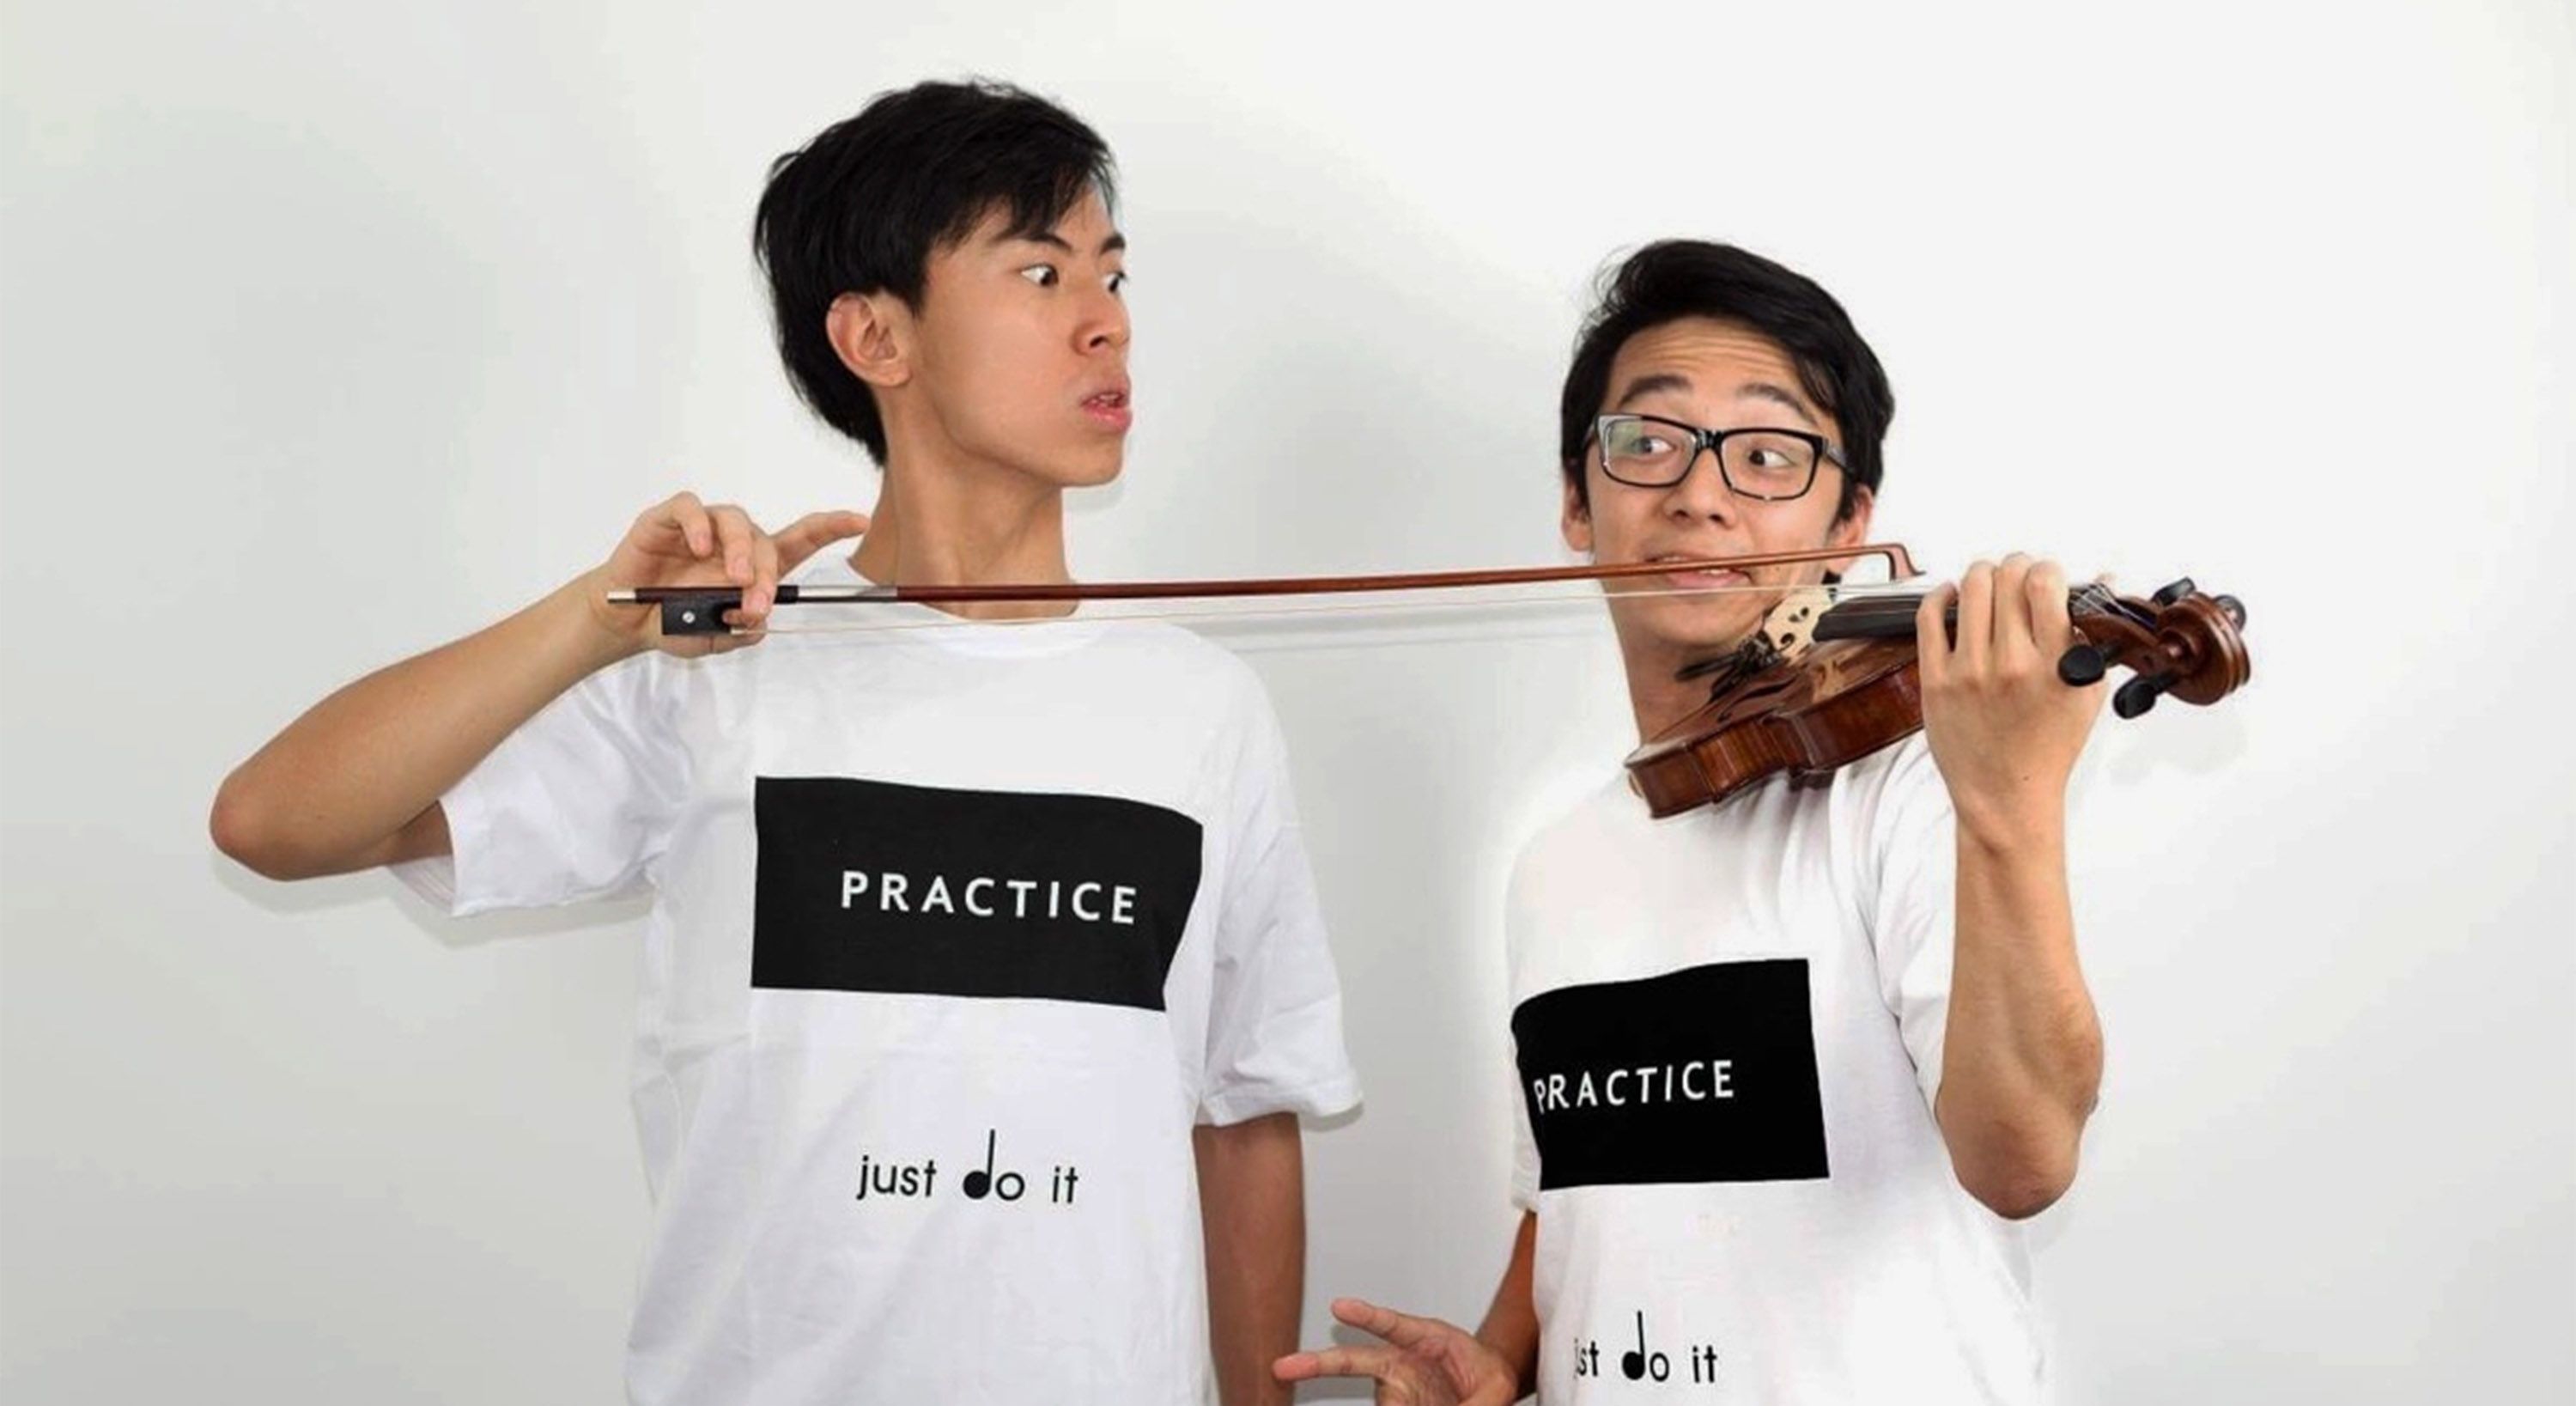 TwoSet Violin: The Comedic Duo